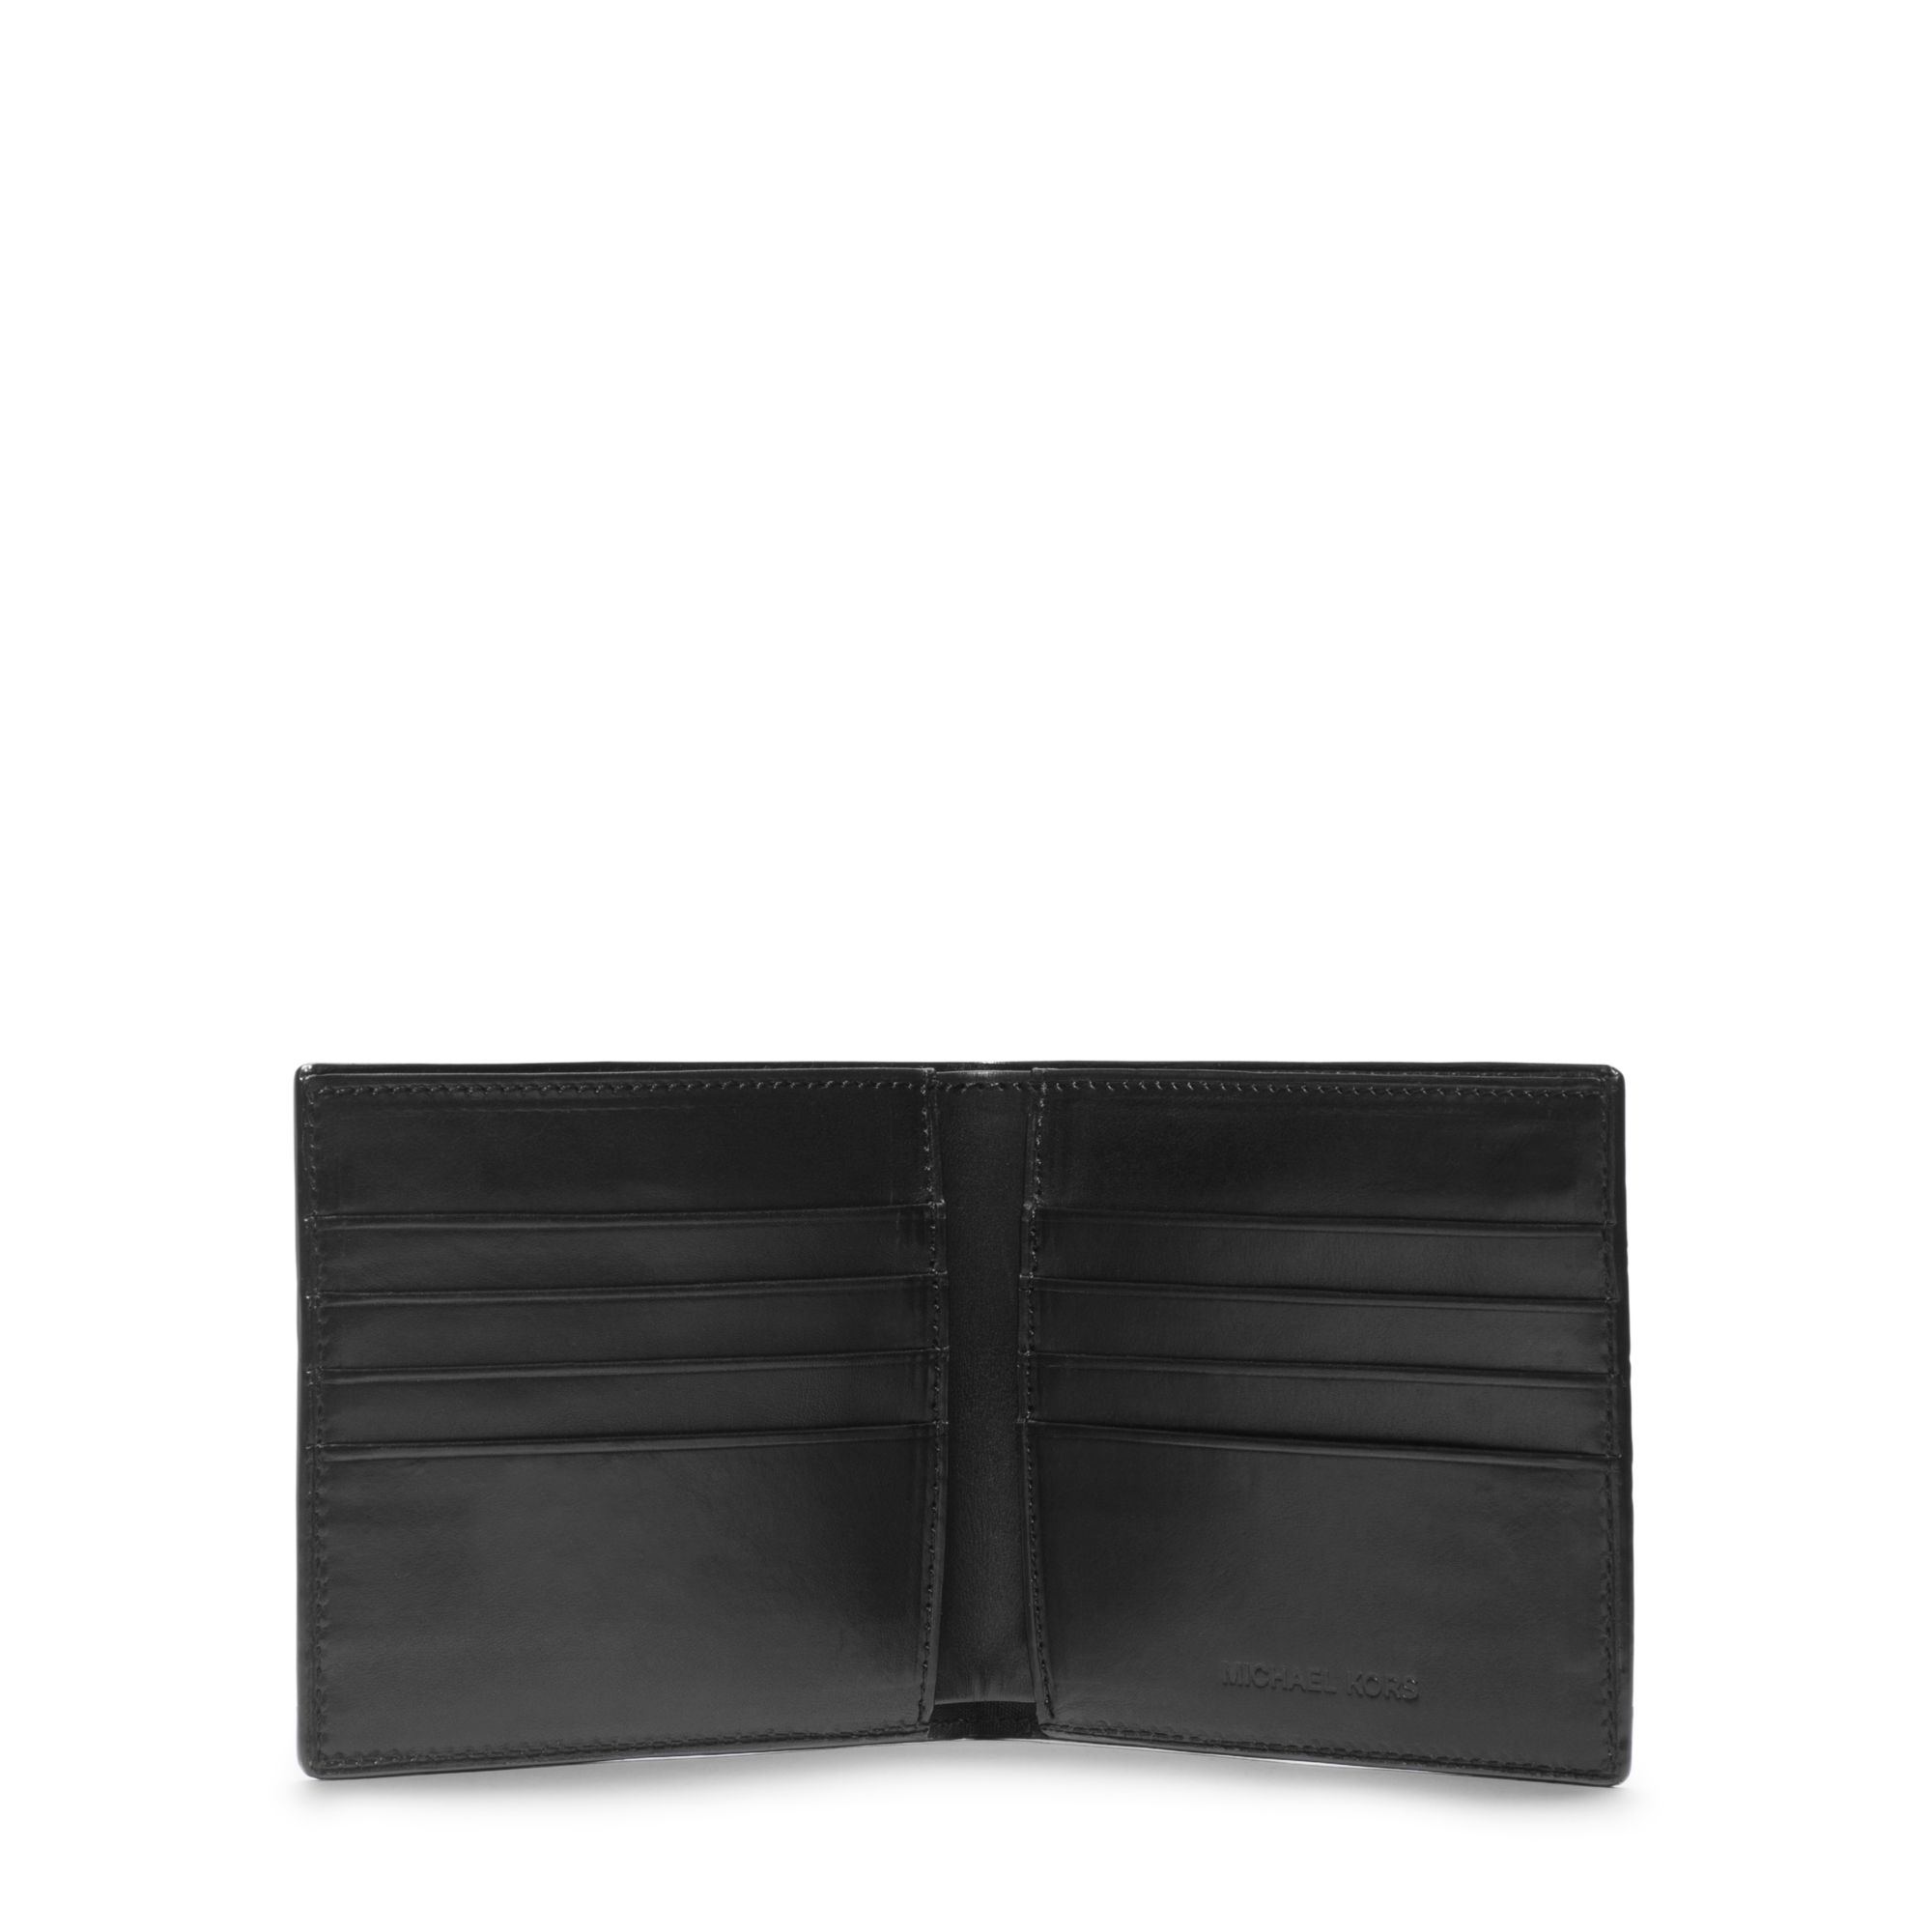 Michael Kors Crocodile Wallet in Black for Men - Lyst